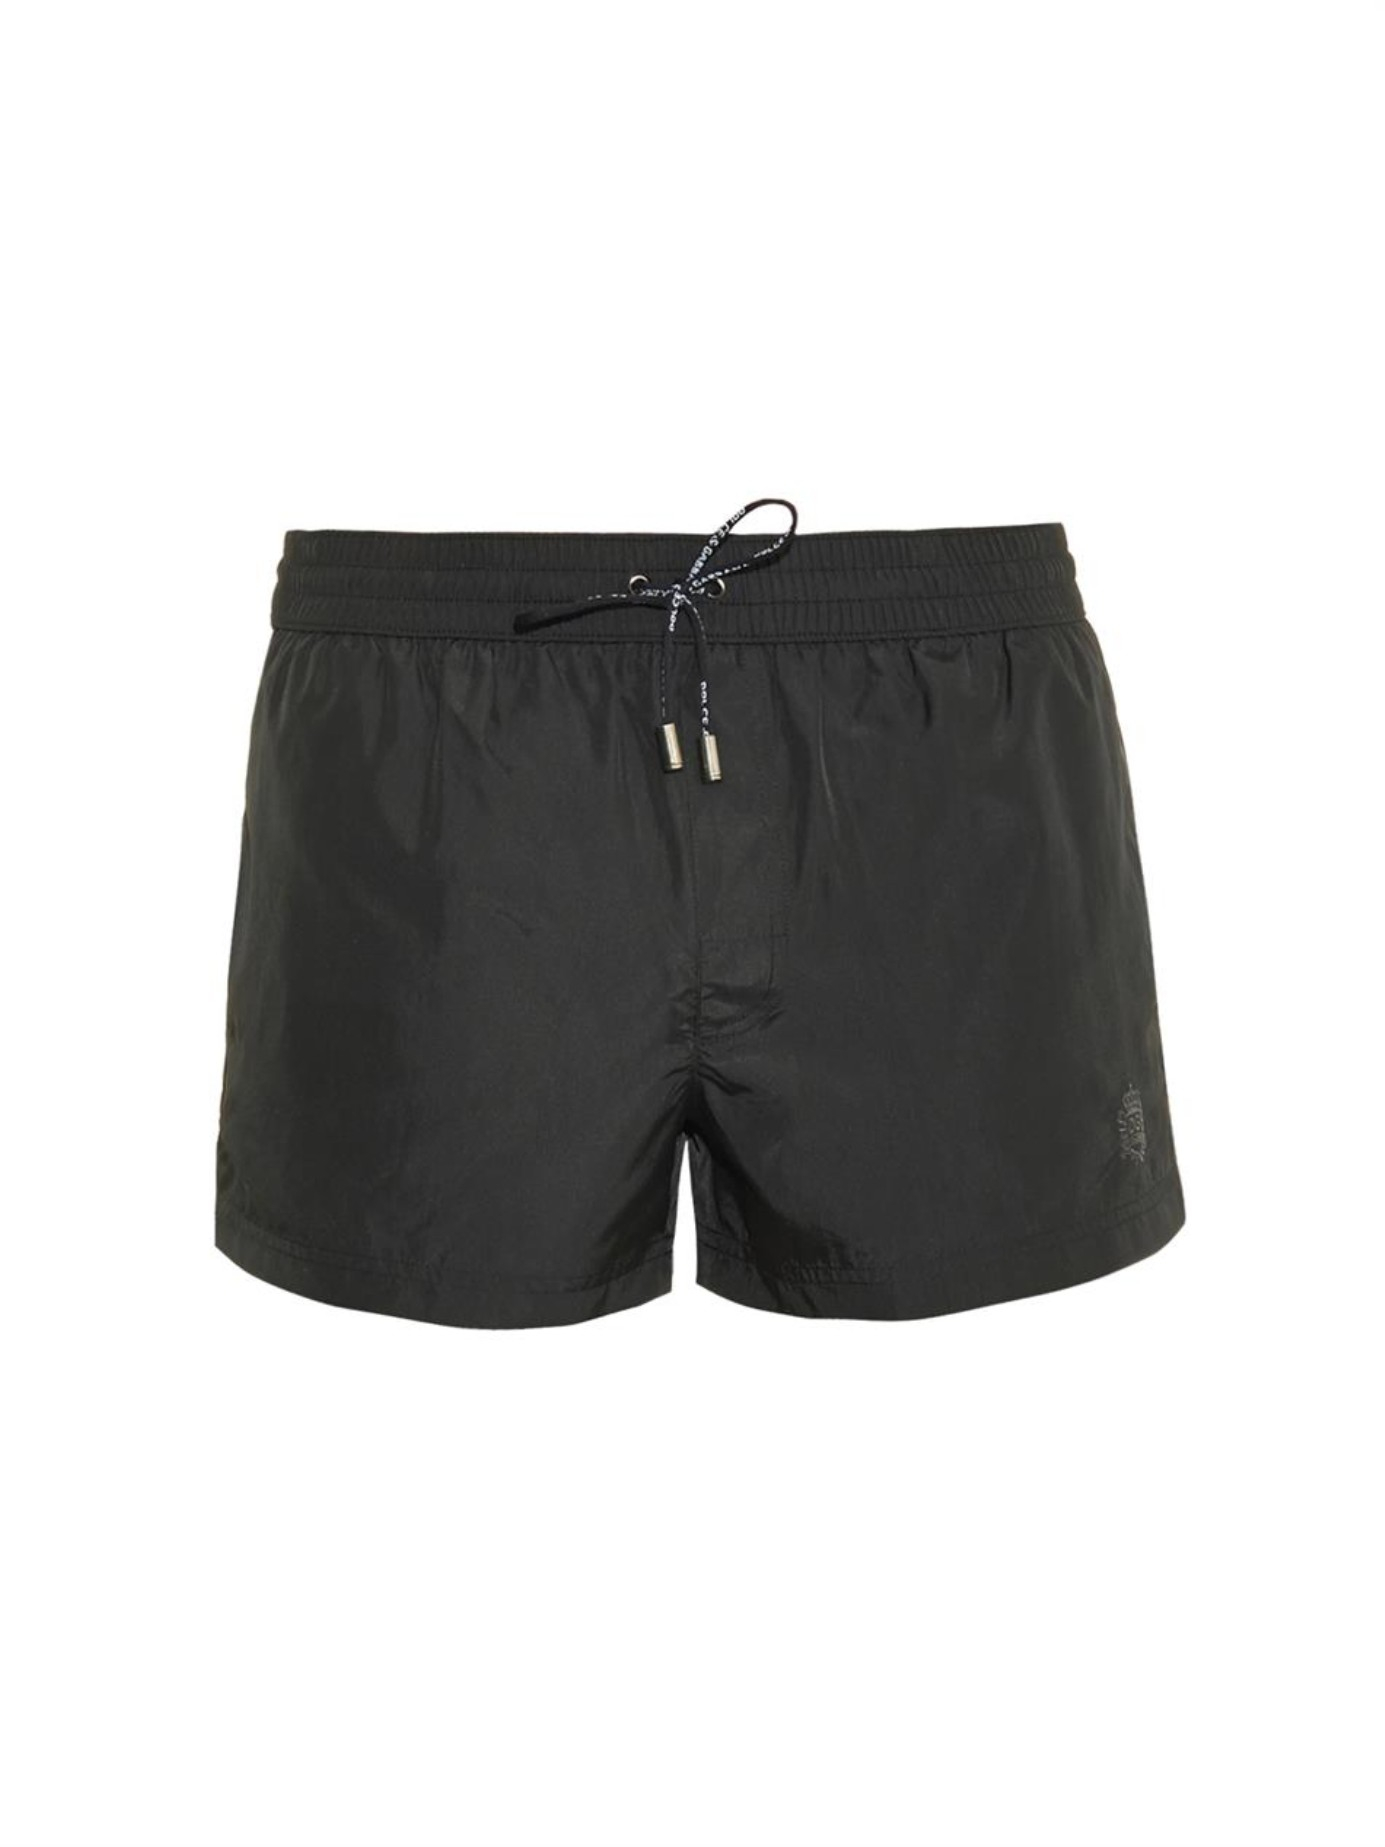 Lyst - Dolce & Gabbana Crest-Embroidered Swim Shorts in Black for Men